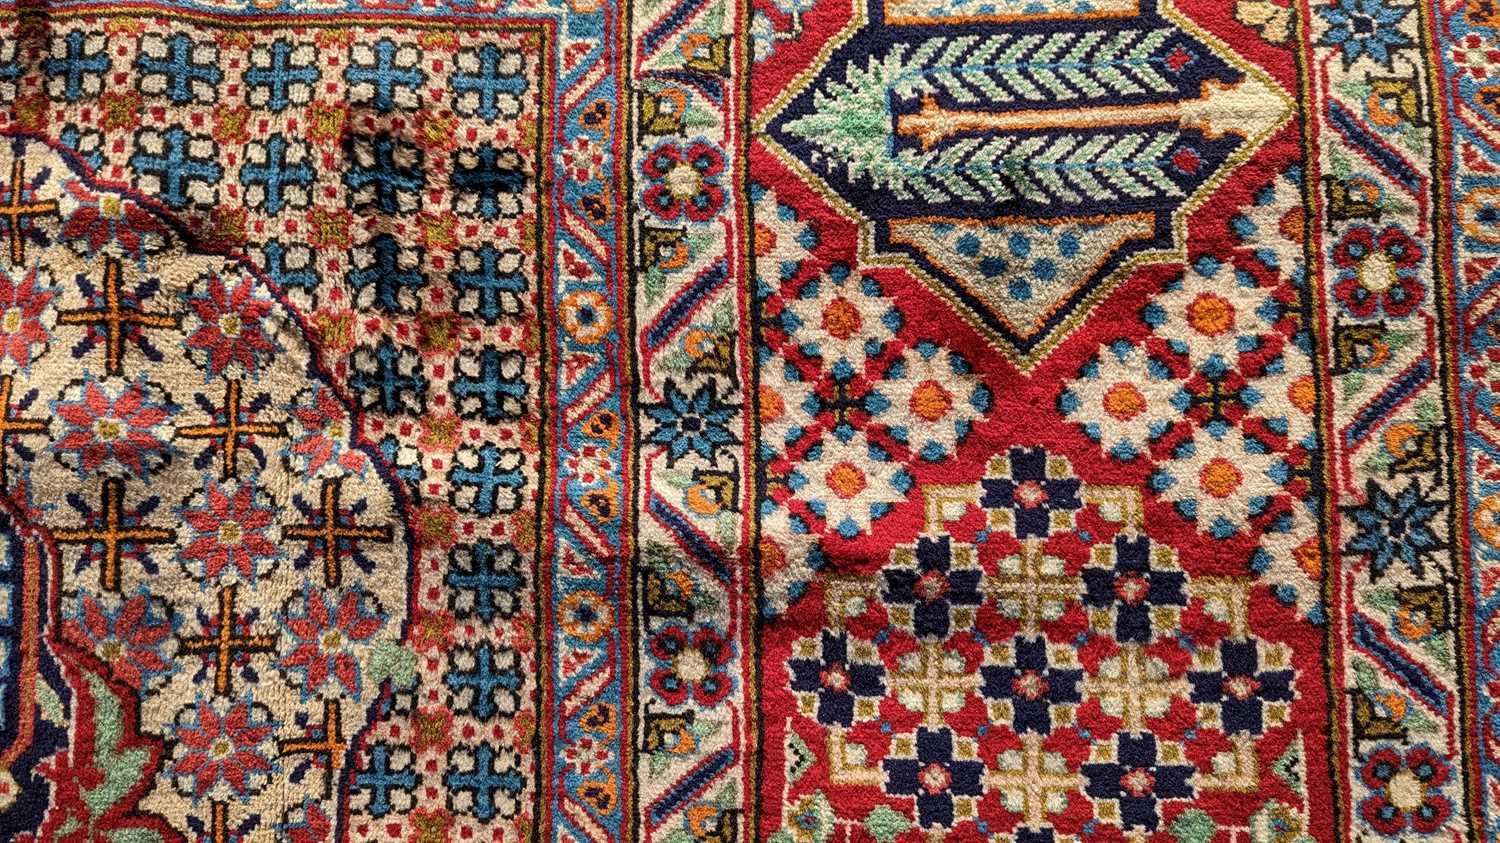 A Tabriz carpet - Image 16 of 24